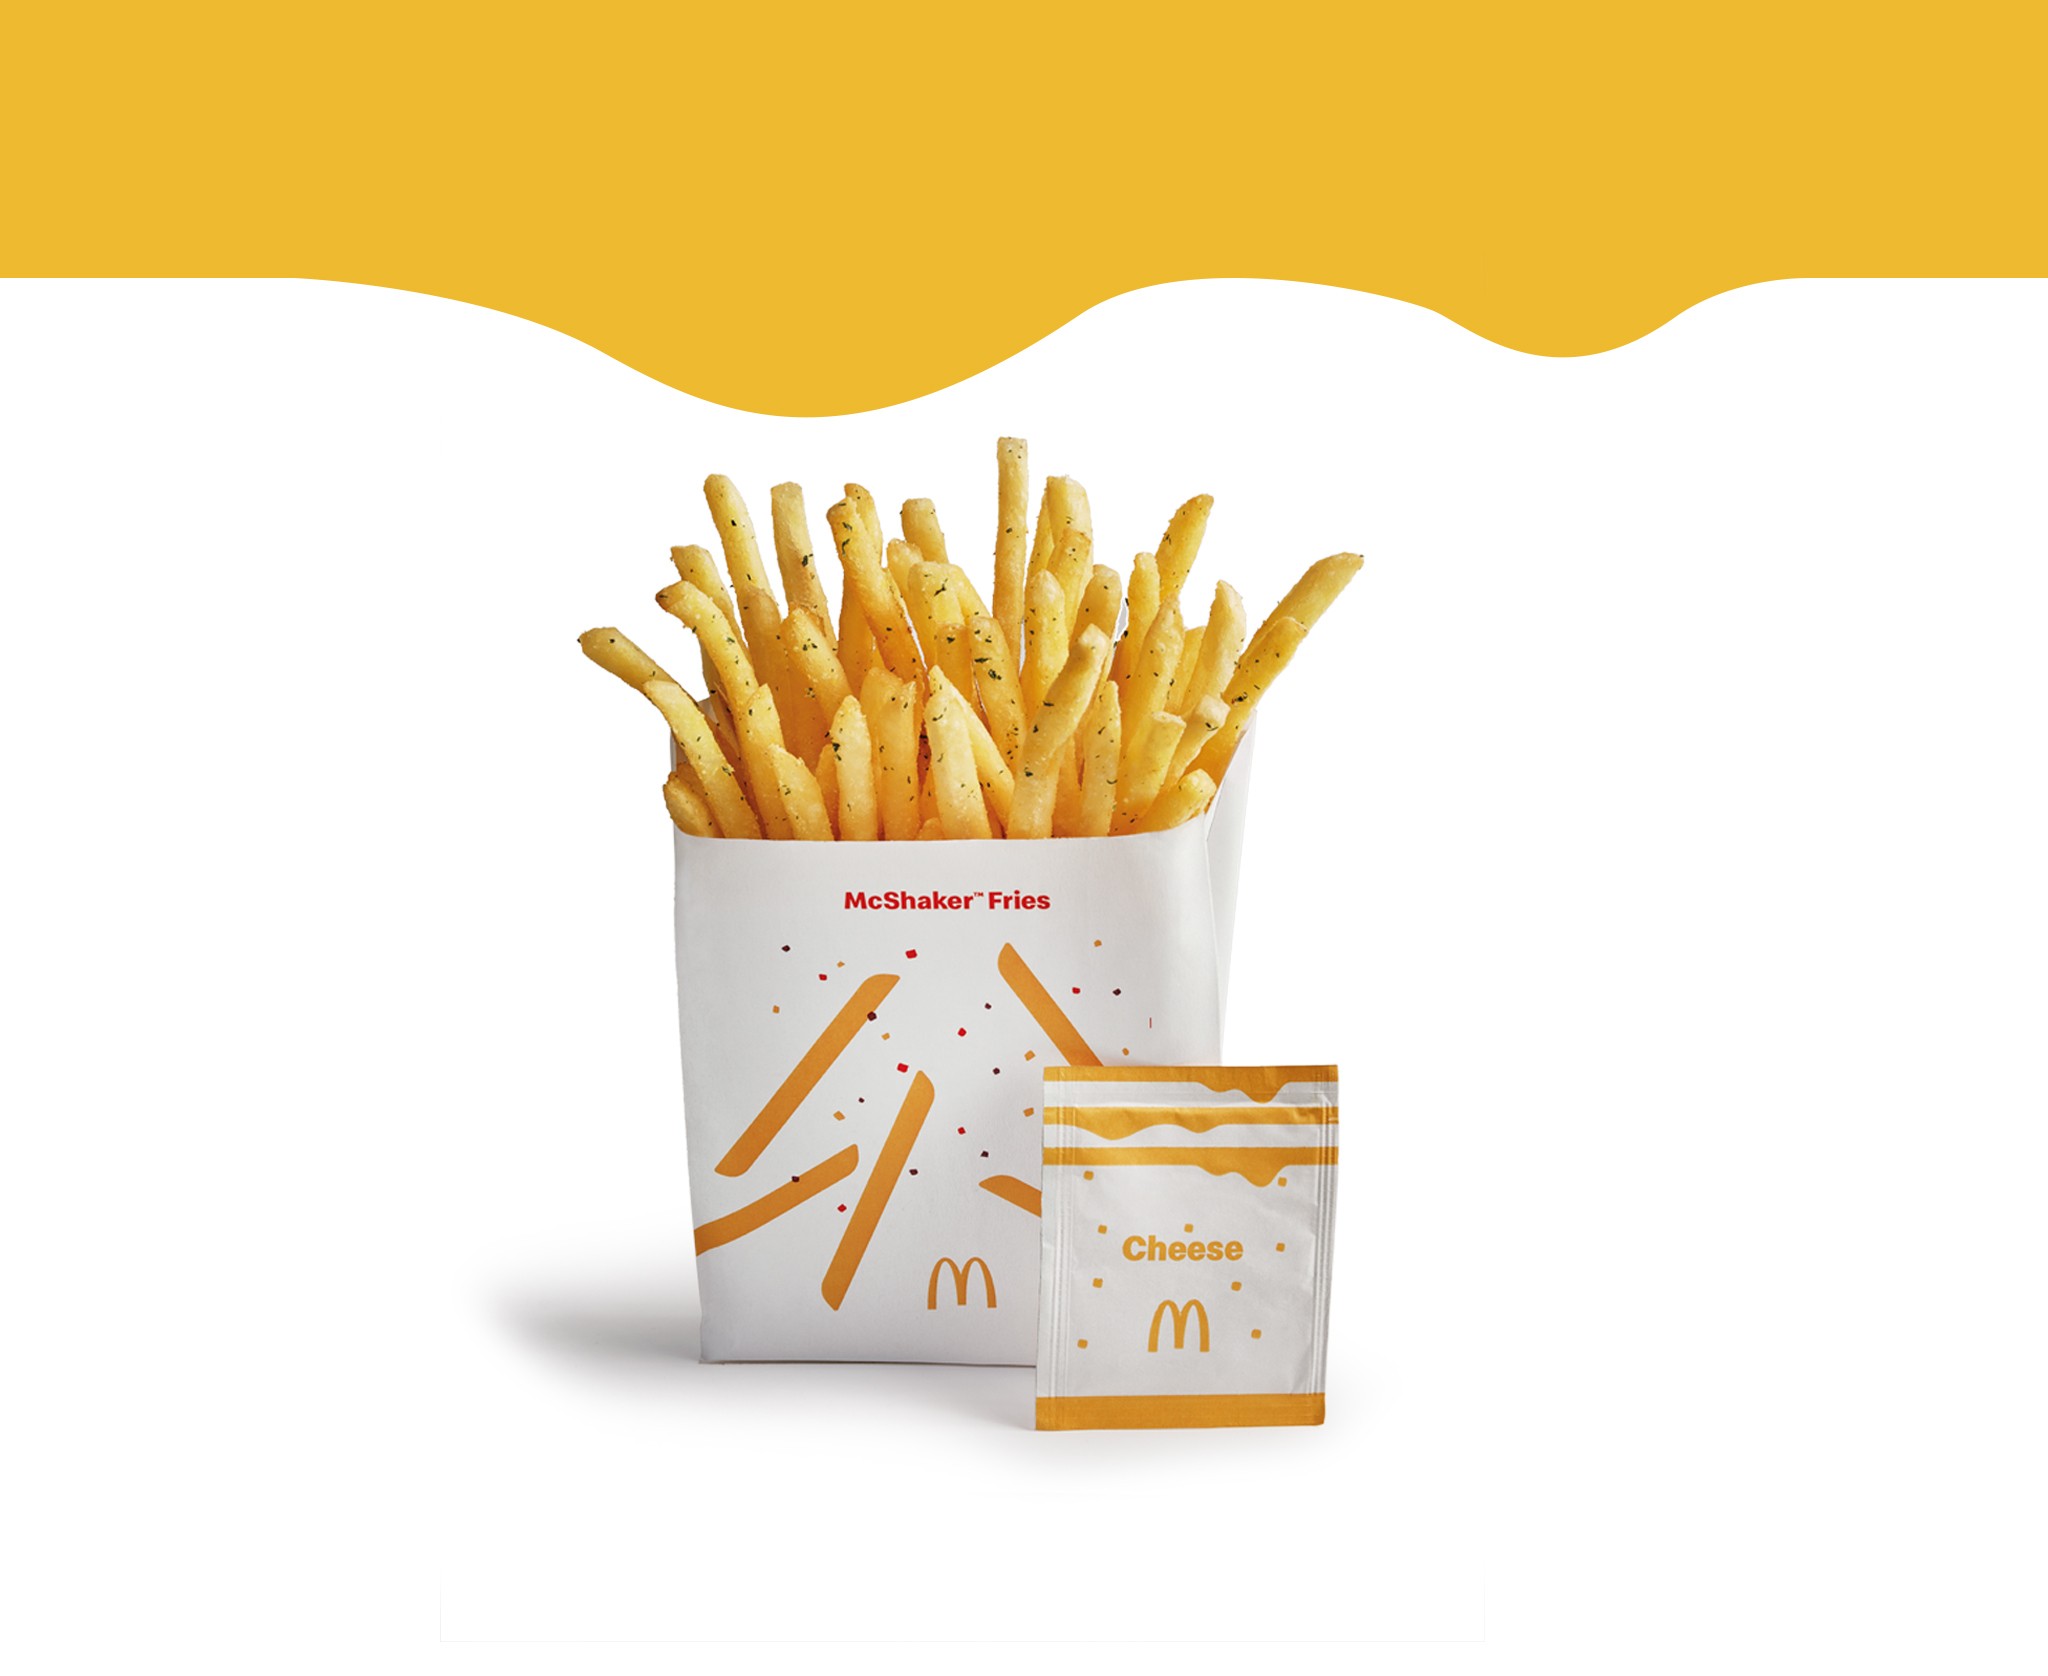 McShaker Fries